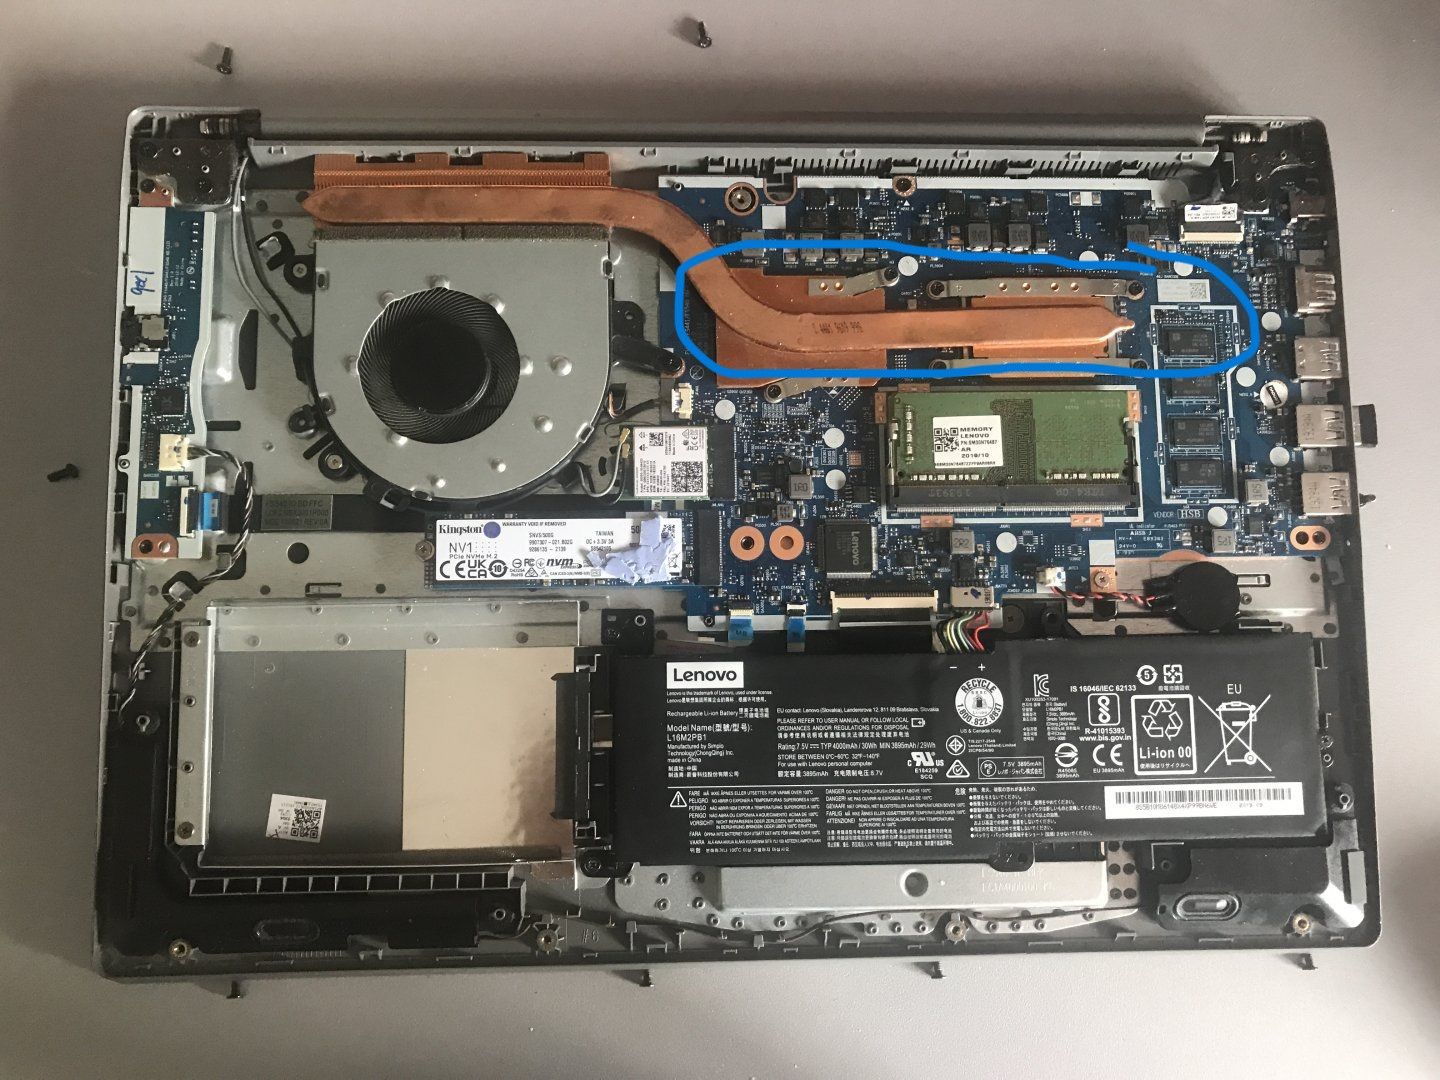 Laptopta MX110 ekran kartı nerede? | Technopat Sosyal